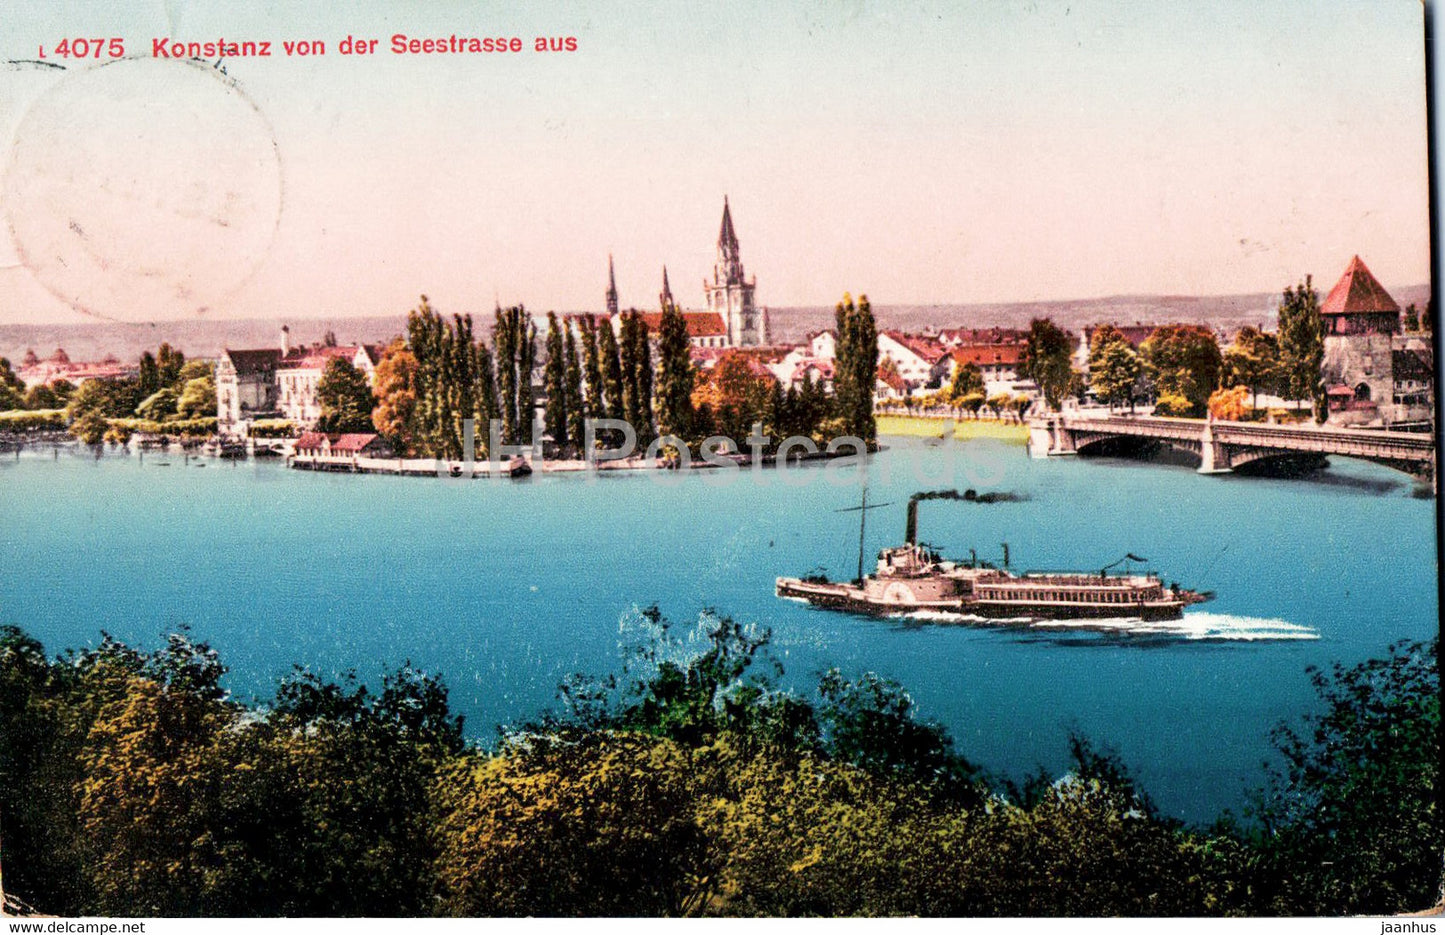 Konstanz von der Seestrasse aus - ship - steamer - 4075 - old postcard - 1911 - Germany - used - JH Postcards